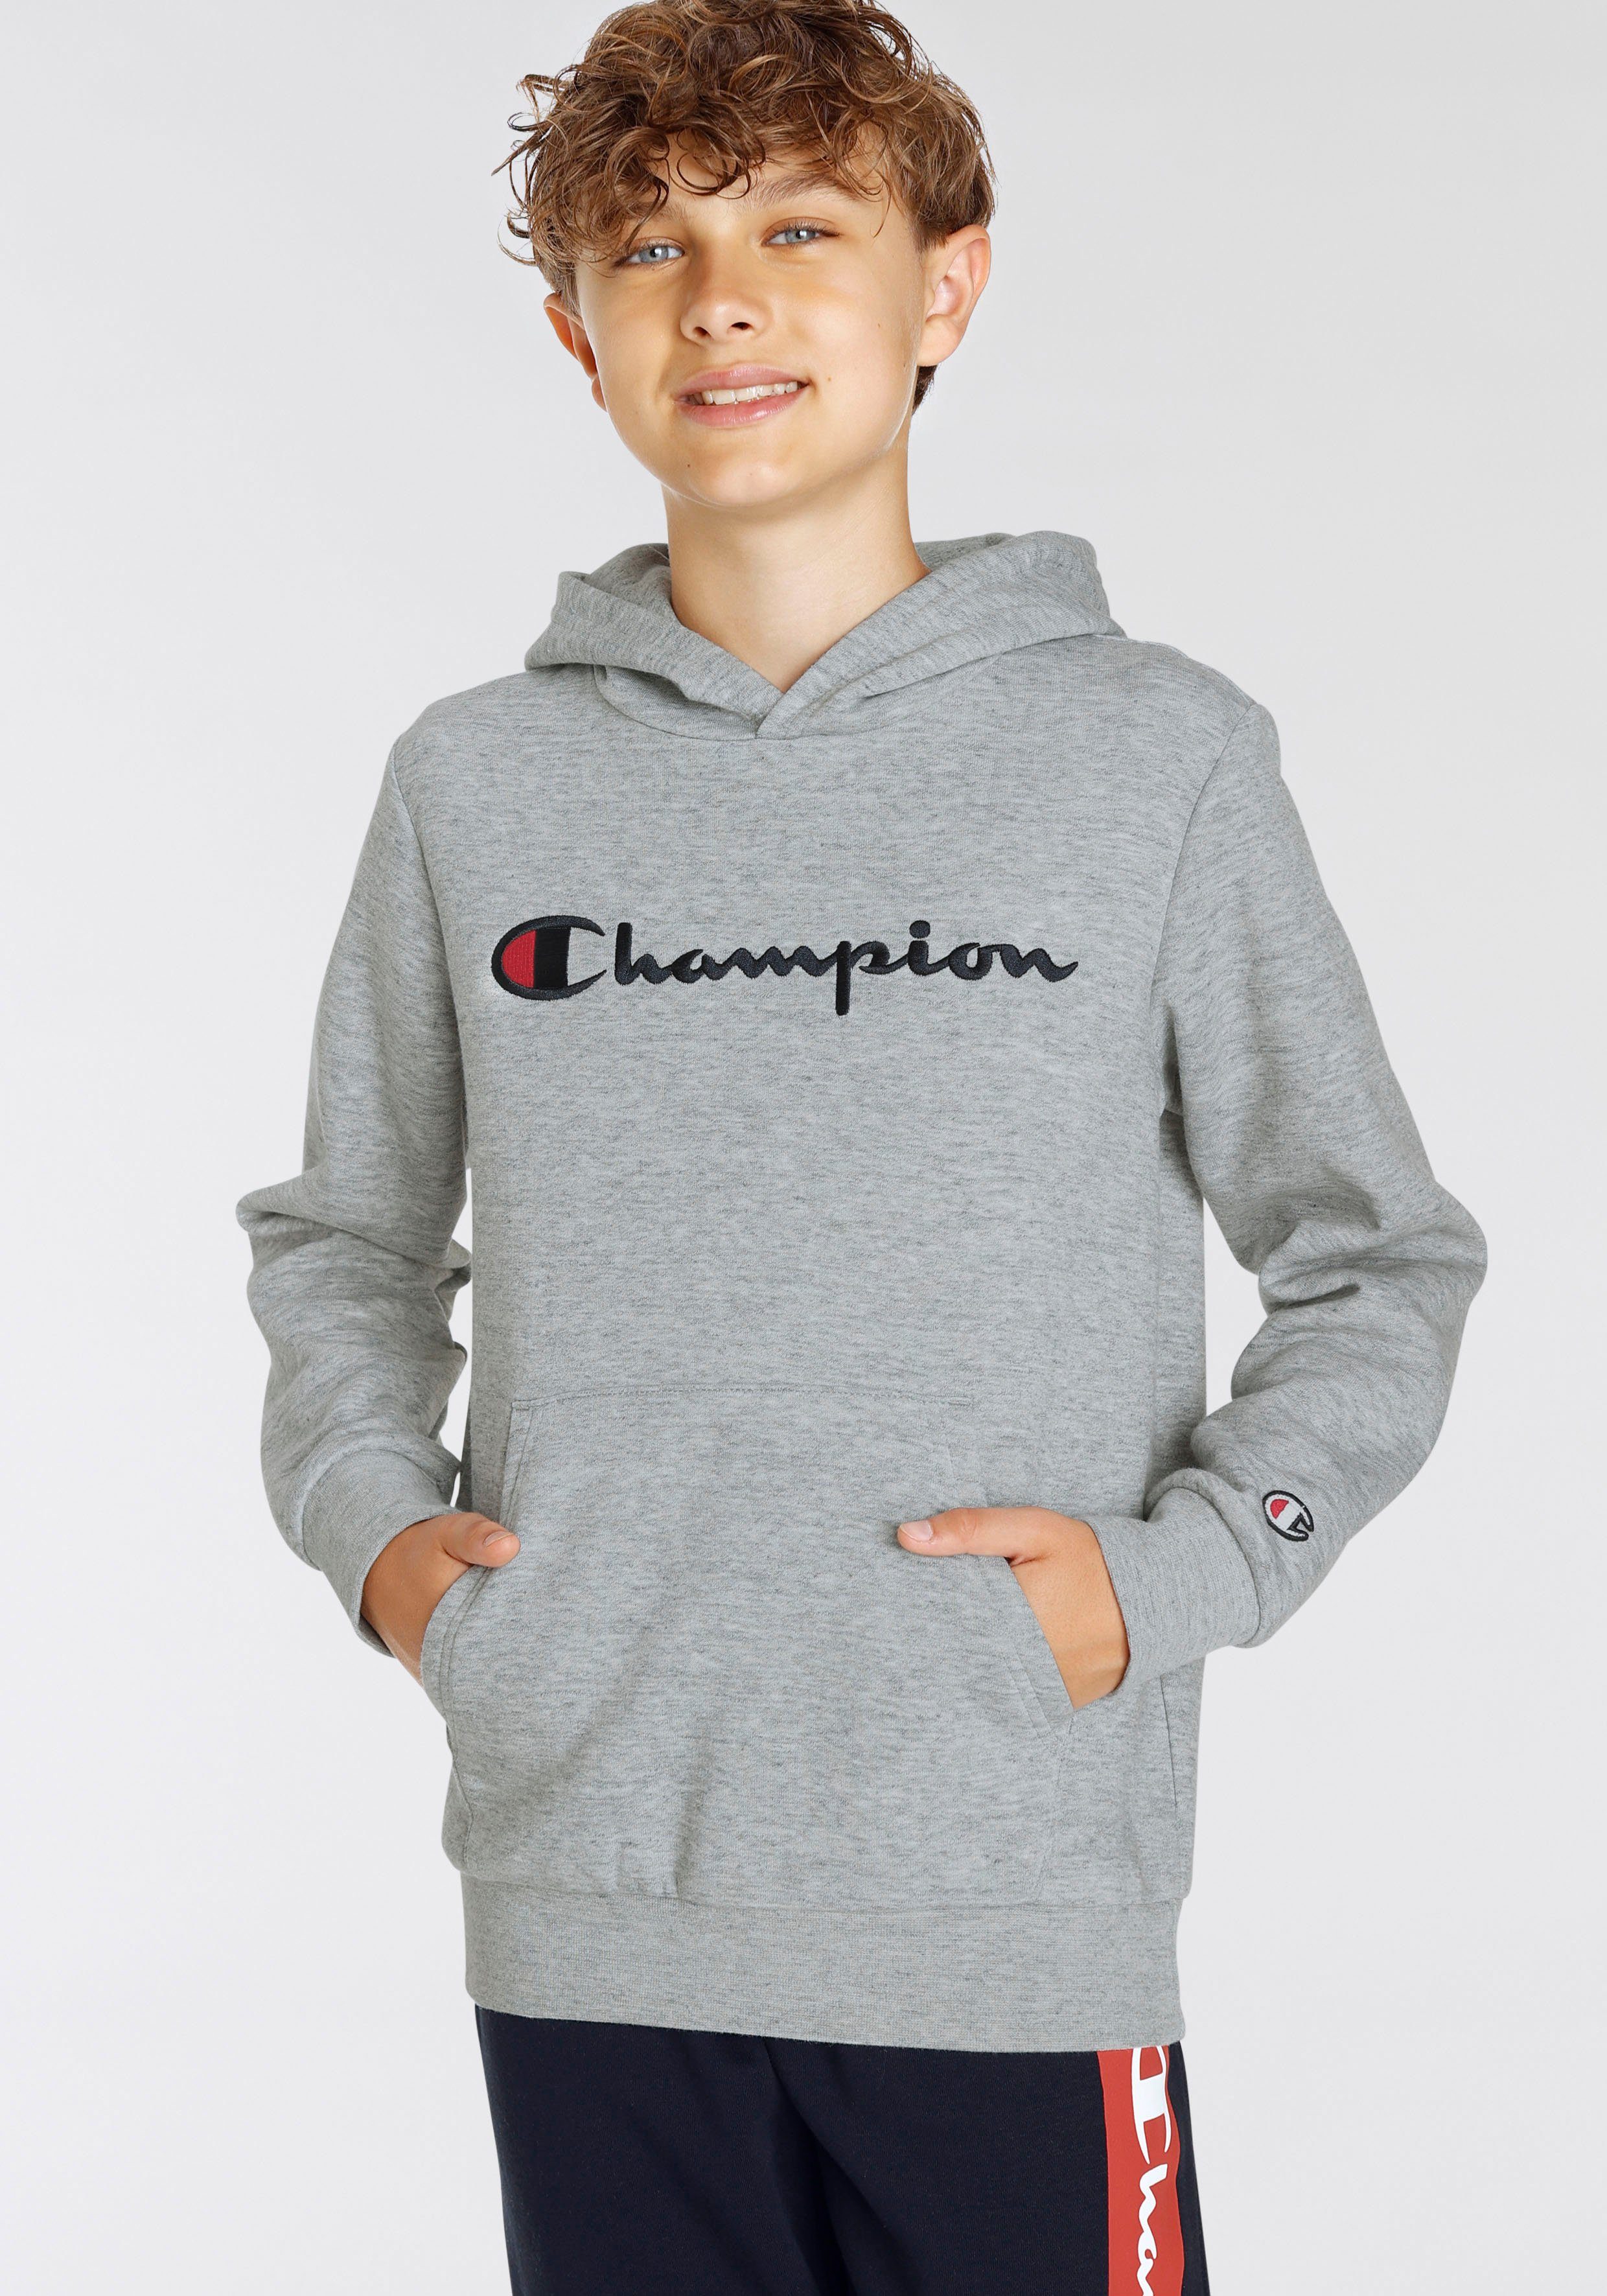 grau Sweatshirt 2 Classic Kinder Hooded Sweatshirt - large für Champion Logo